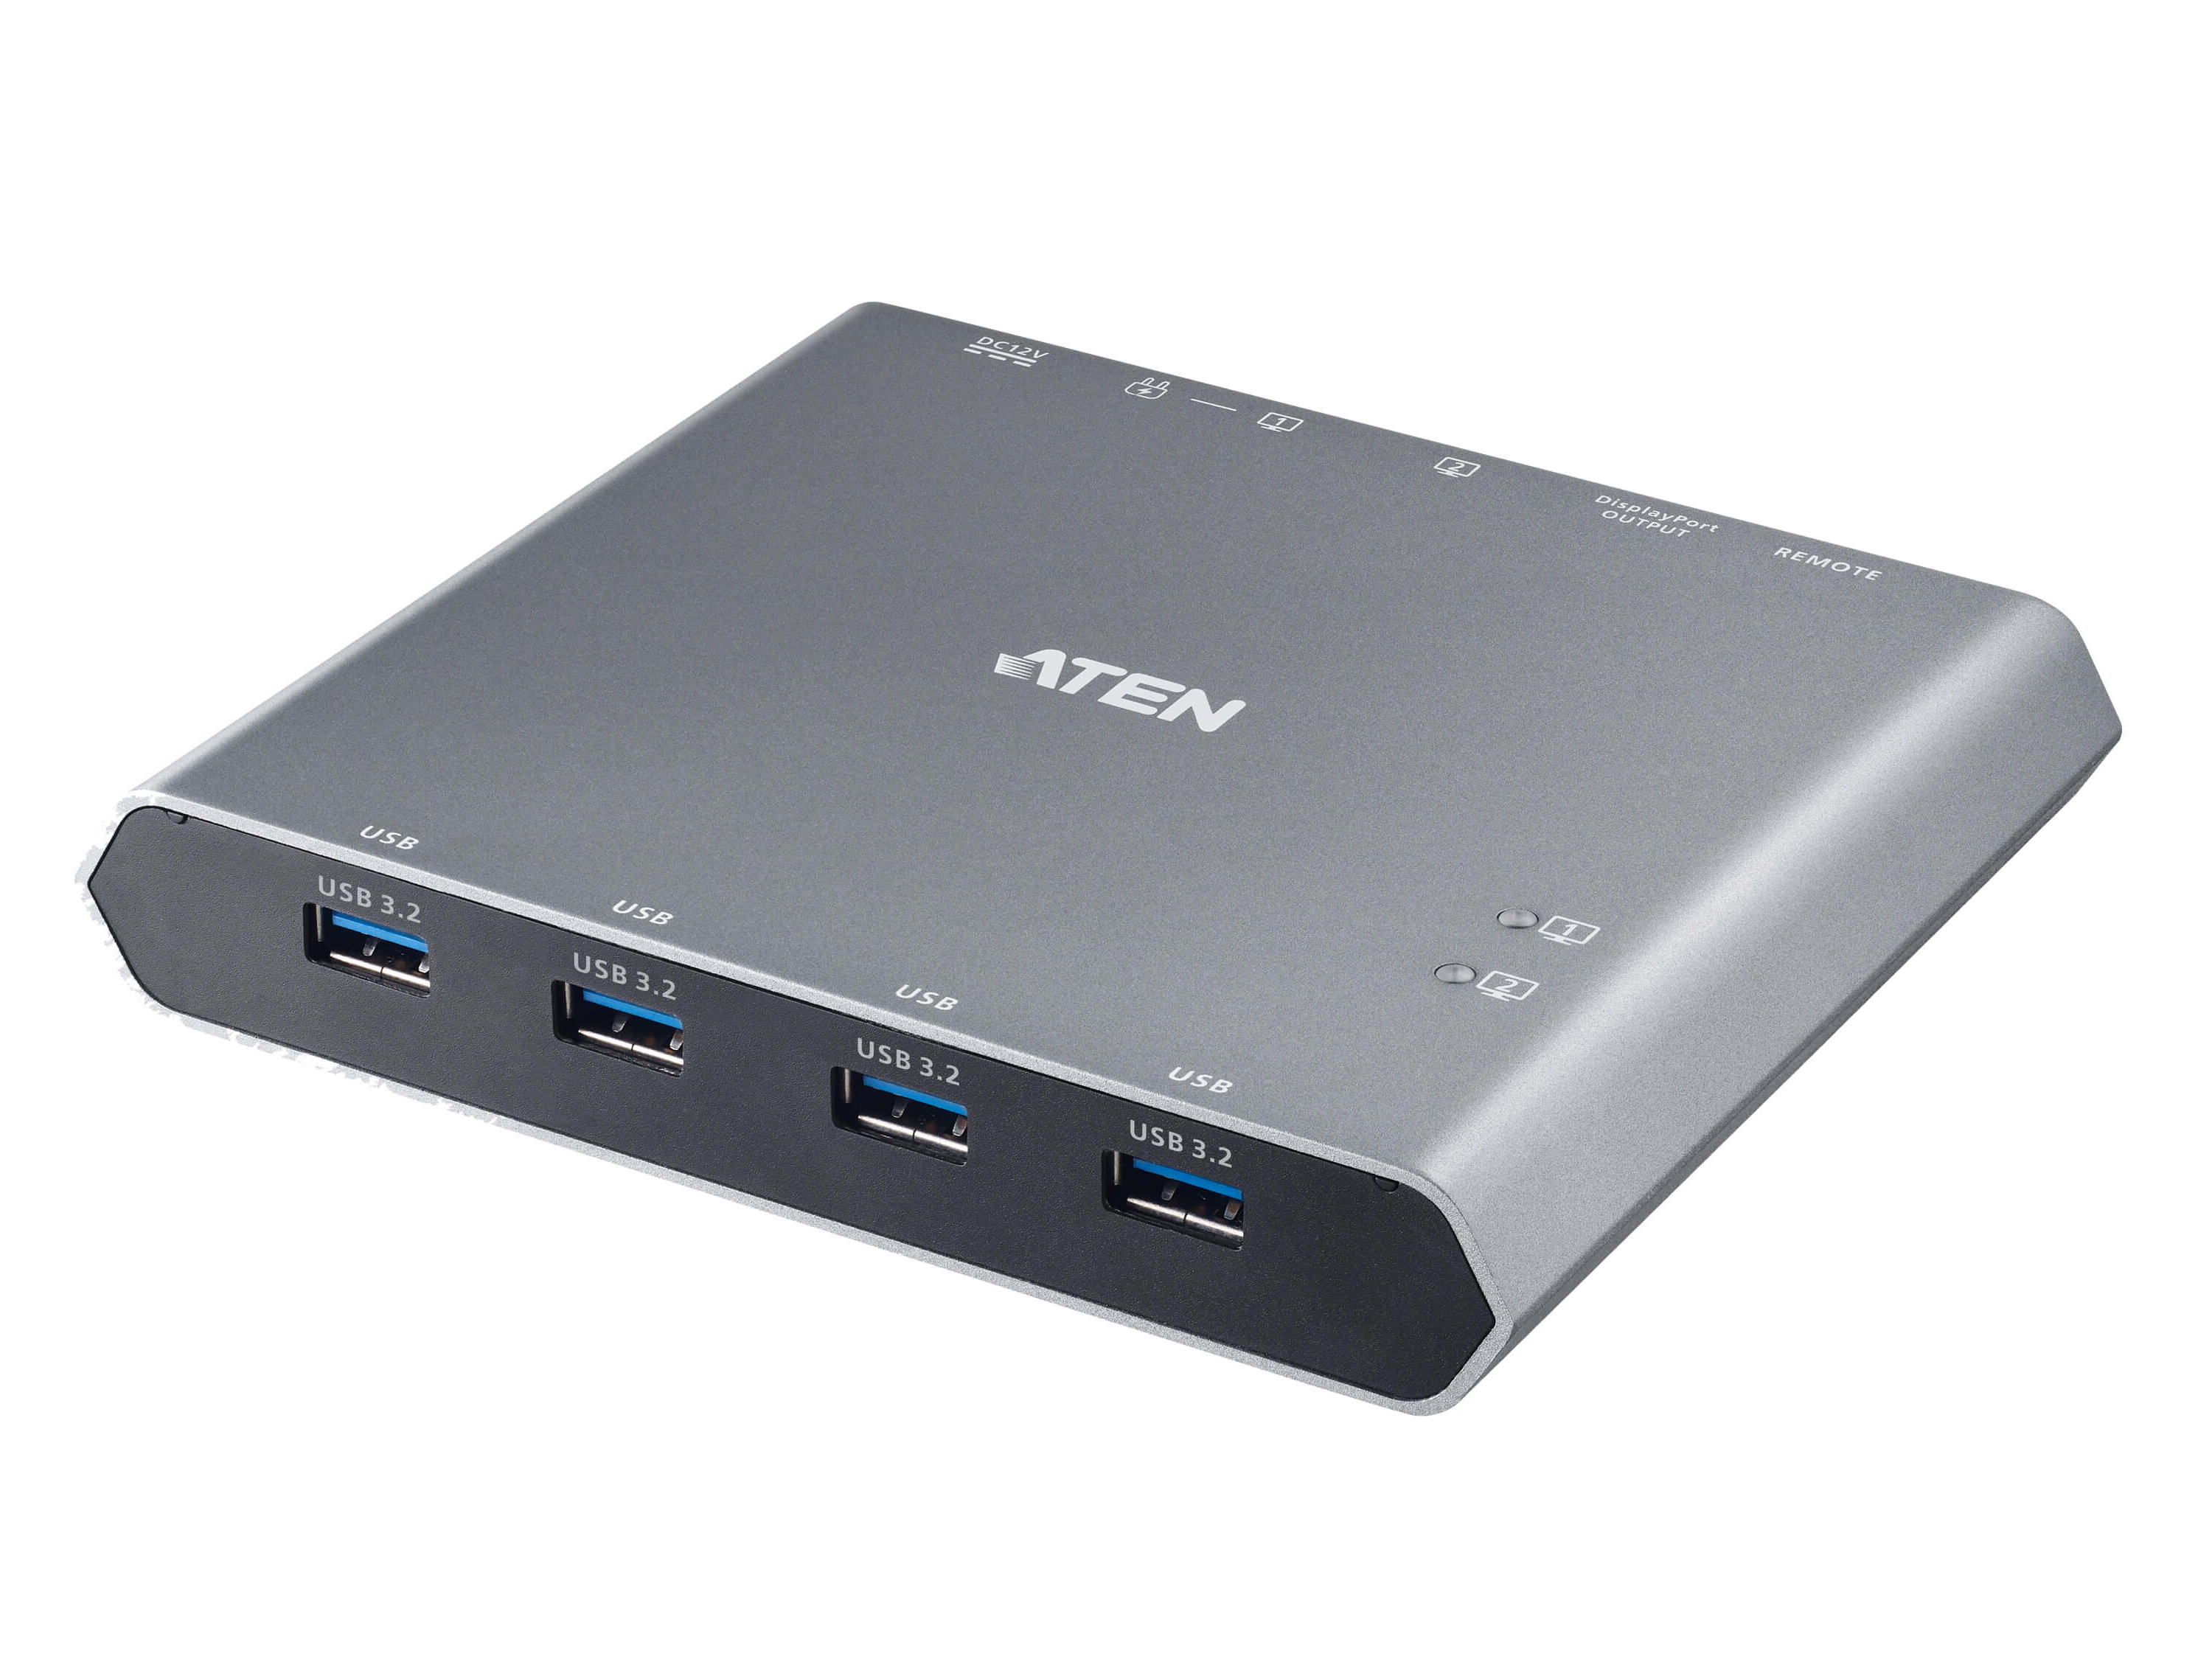 Aten US3311 2-Port 4K DisplayPort USB-C KVM Dock Switch with Power Pass-Through